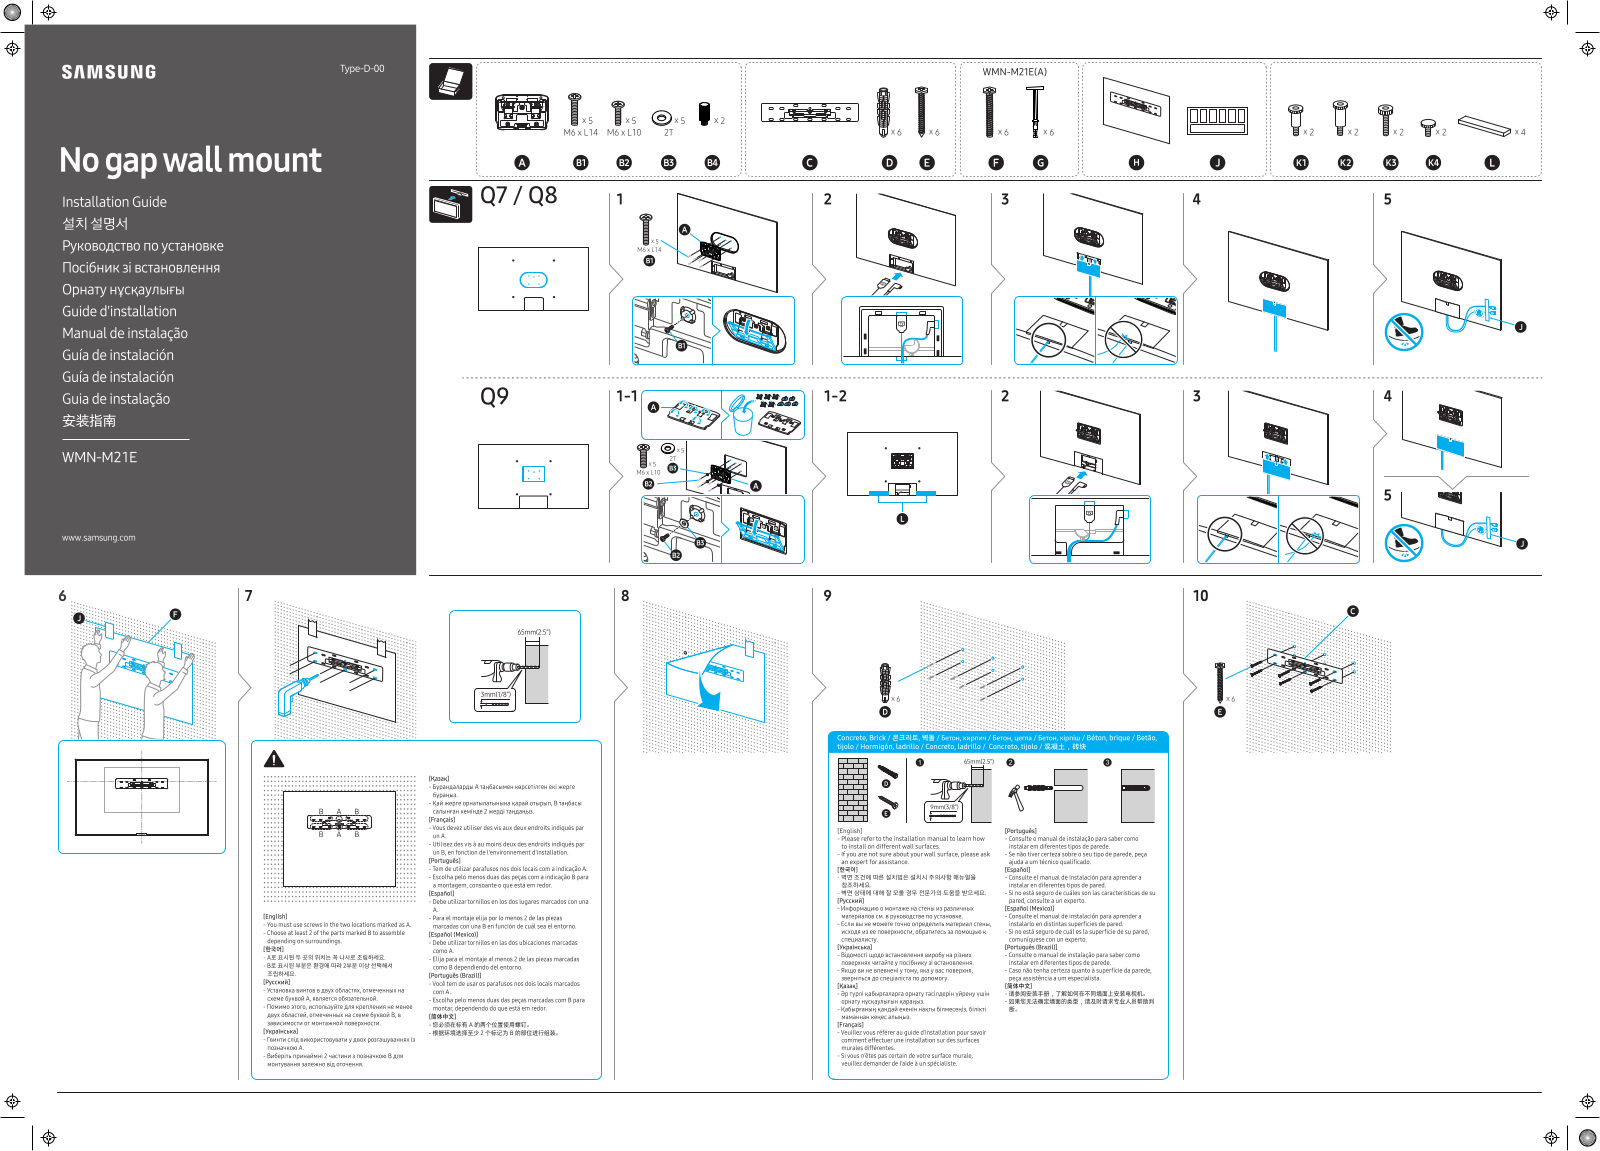 Samsung WMN-M21EB User Manual